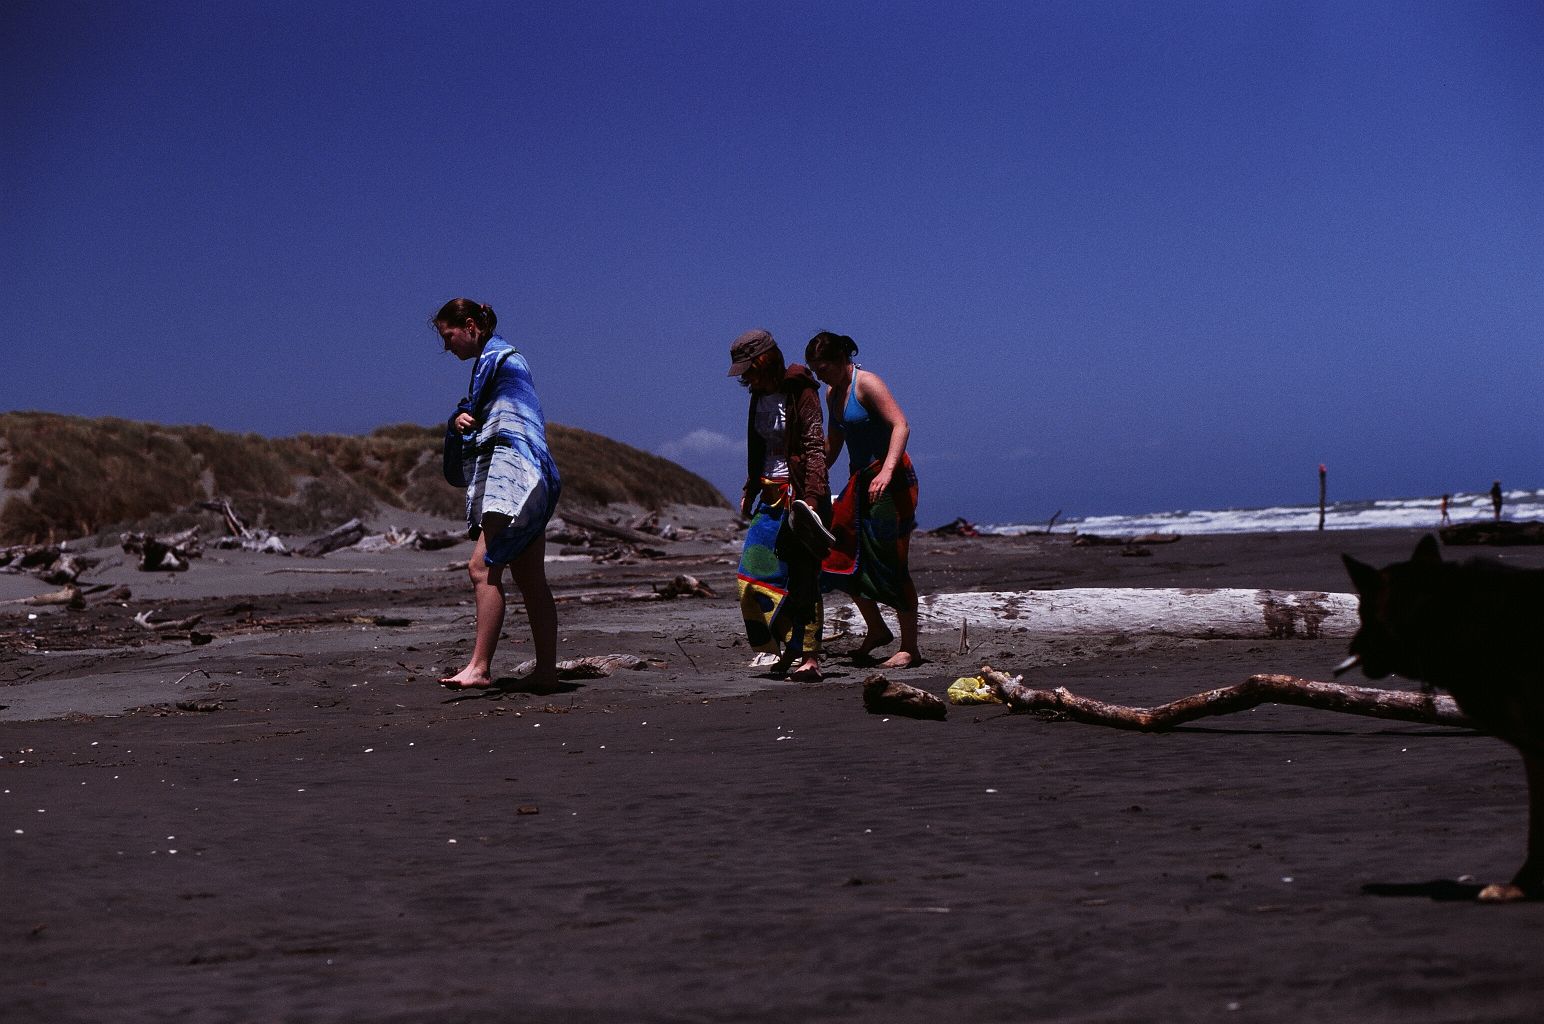 fotka / image cerne plaze Taranaki, z Aucklandu do Wellingtonu